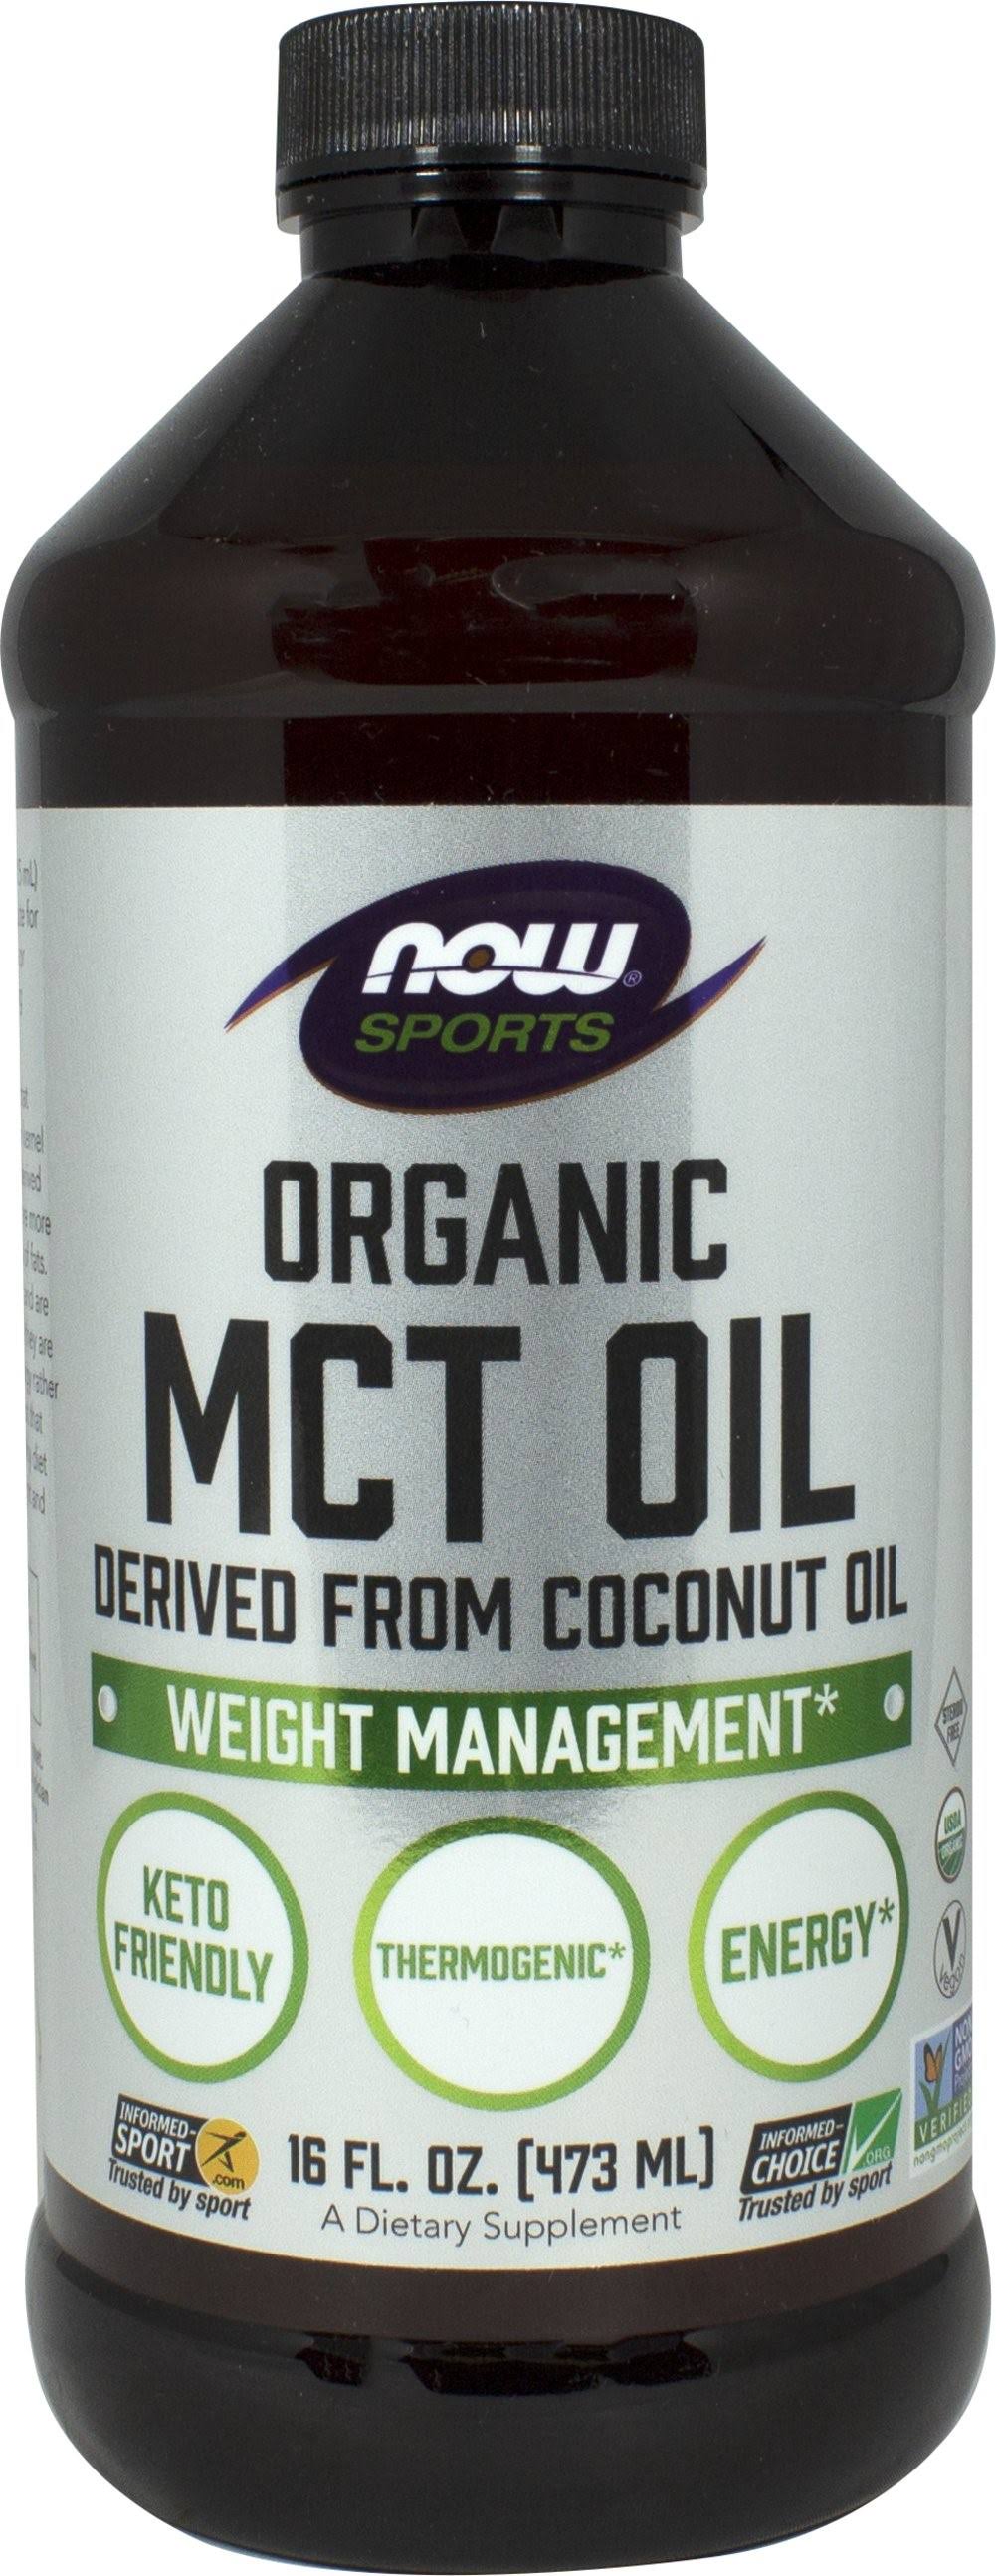 Now MCT Oil, Organic - 16 fl. oz